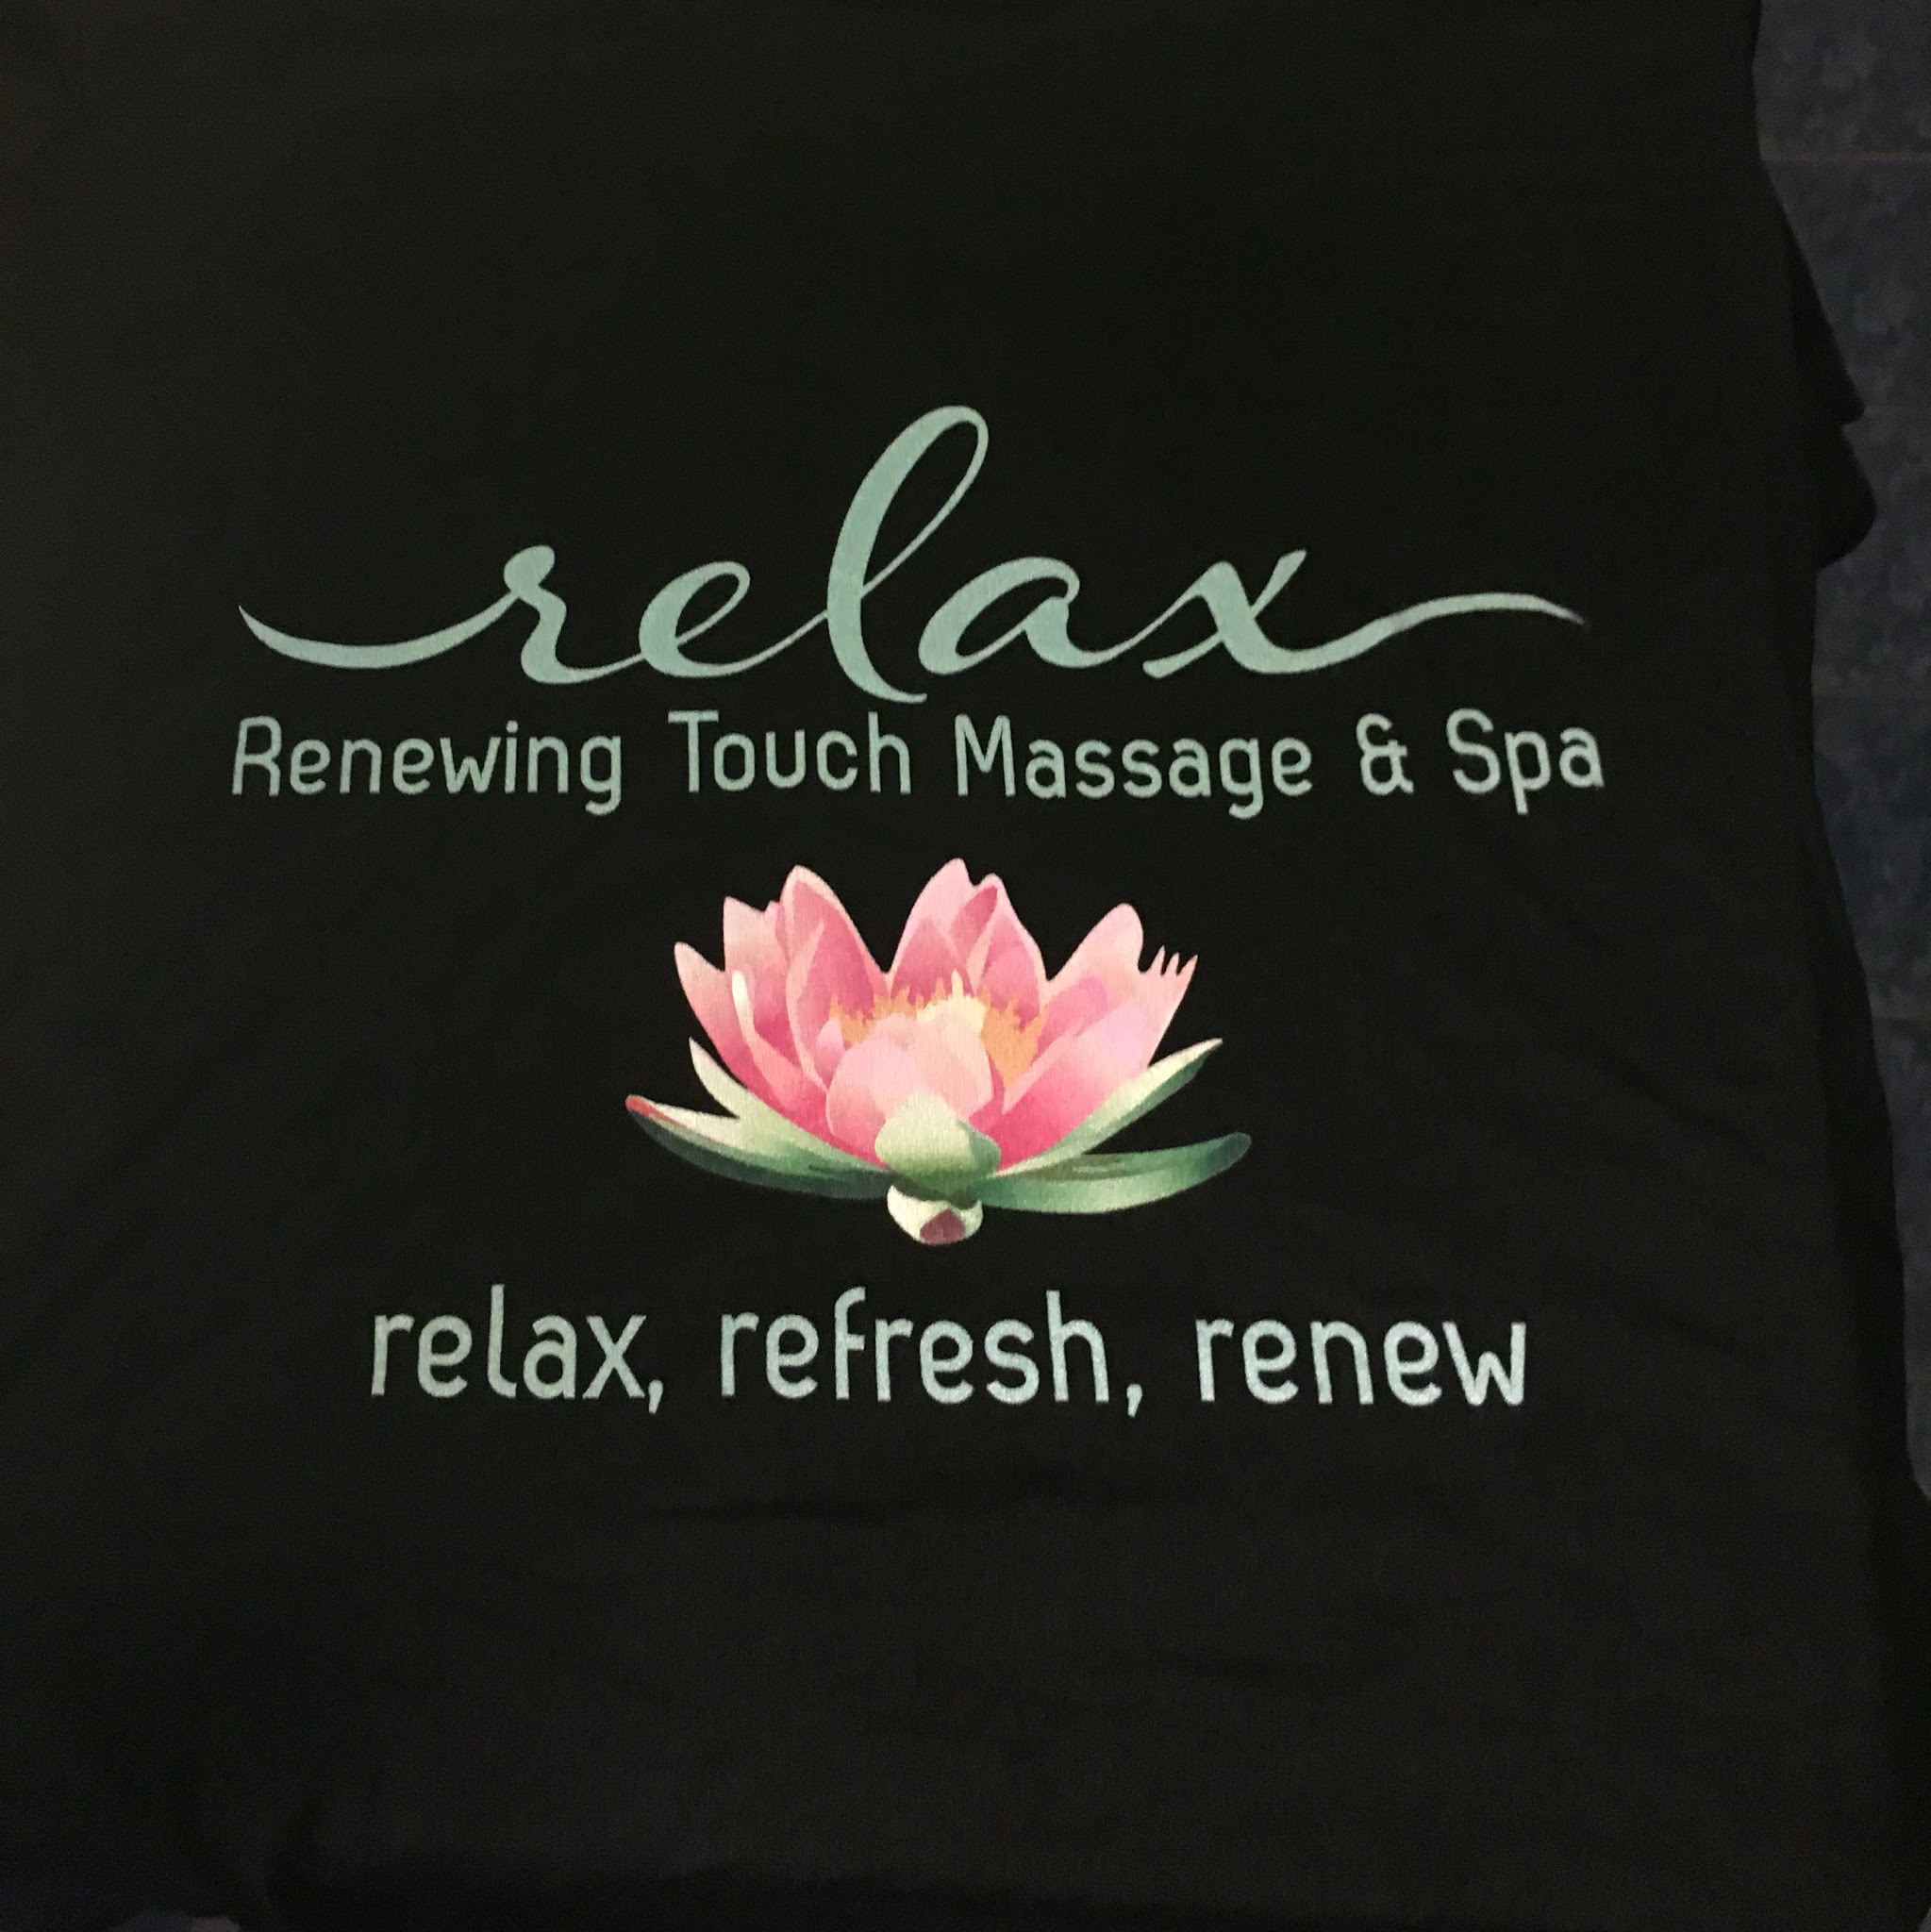 Renewing Touch Massage